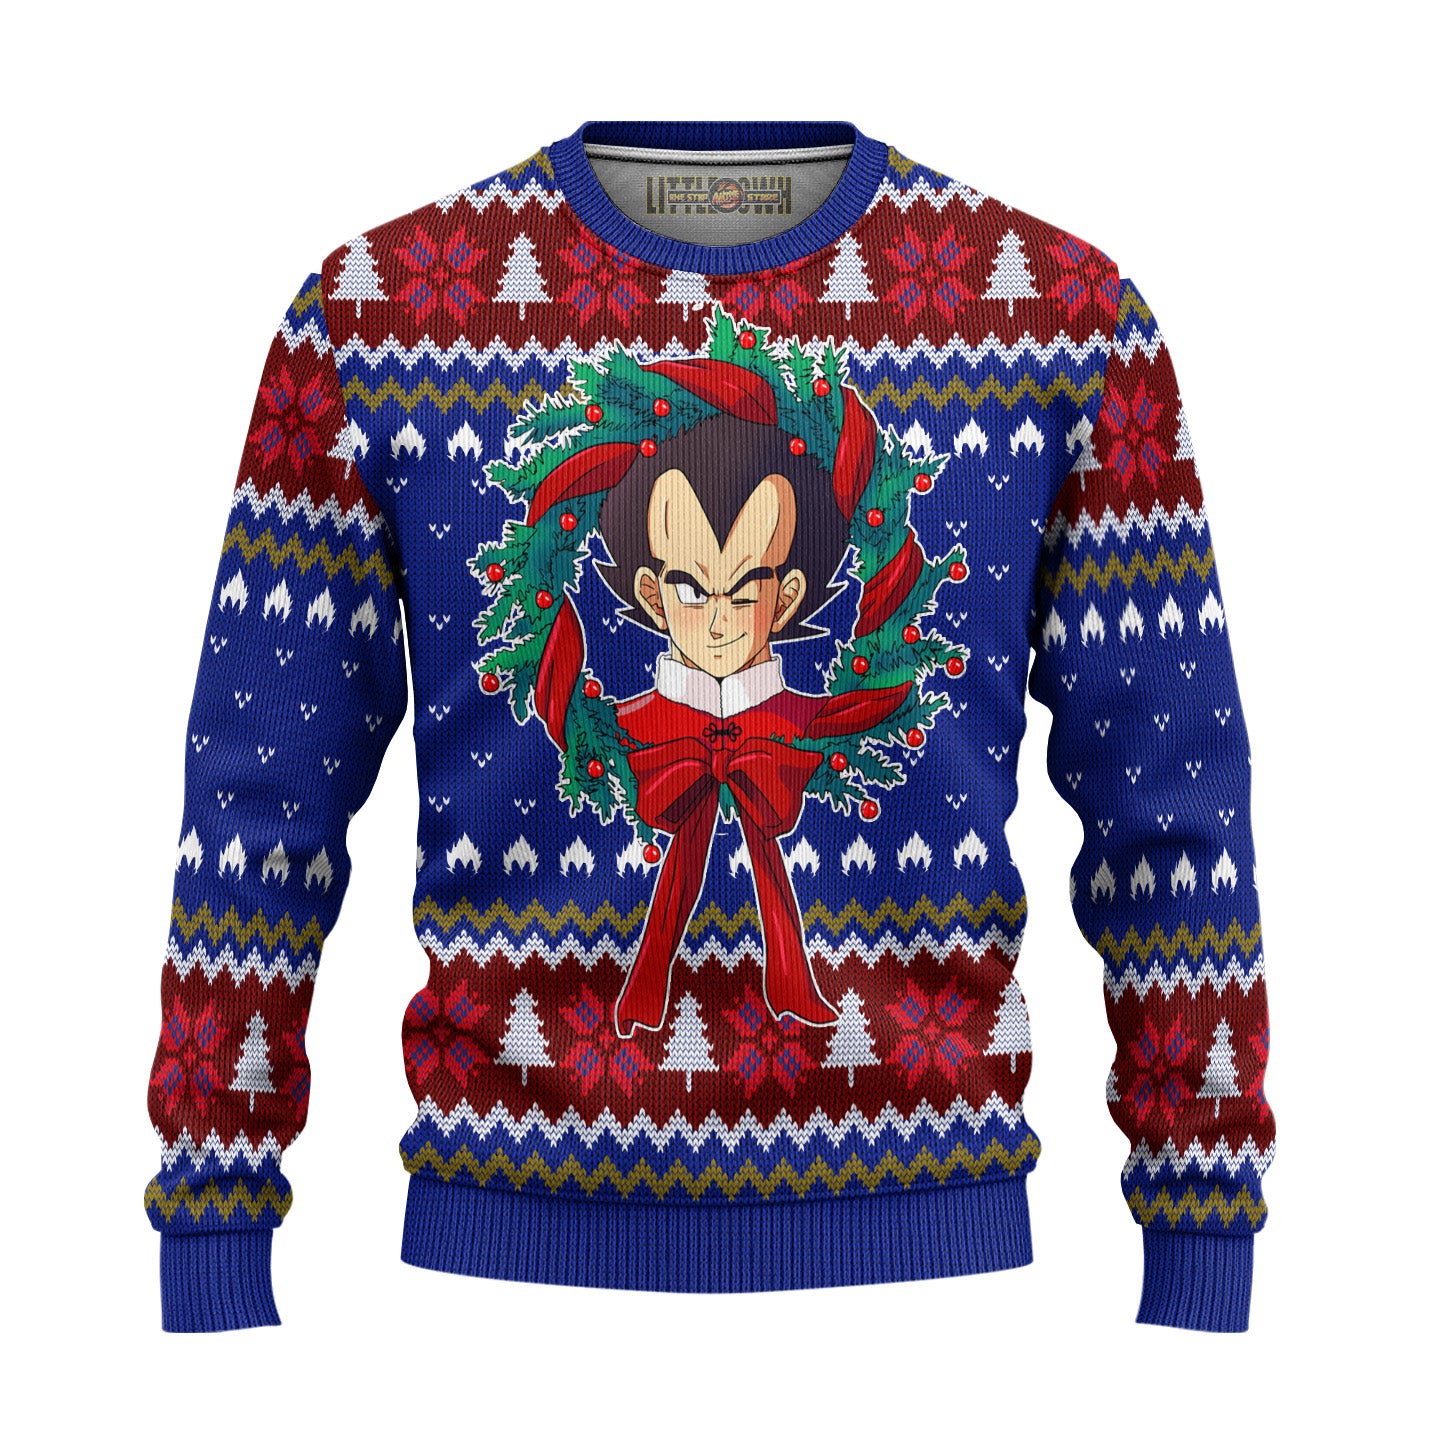 Shiratorizawa Academy Ugly Christmas Sweater Haikyuu Anime New Design